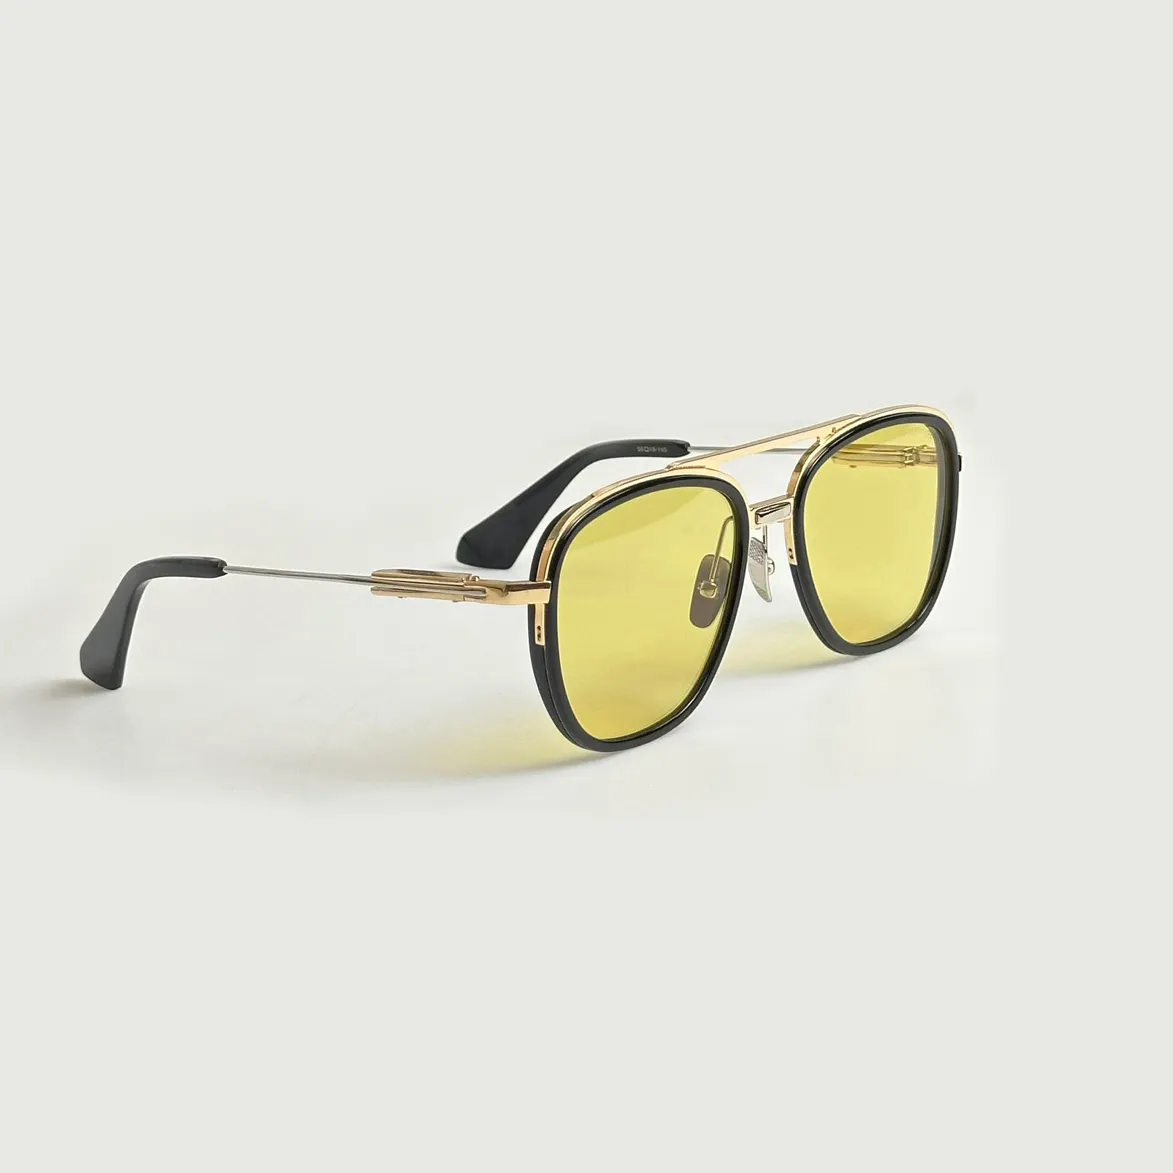 Gold Yellow Sunglasses Typle 402 Men Summer Sunnies gafas de sol Sonnenbrille UV400 Eye Wear Unisex with Box